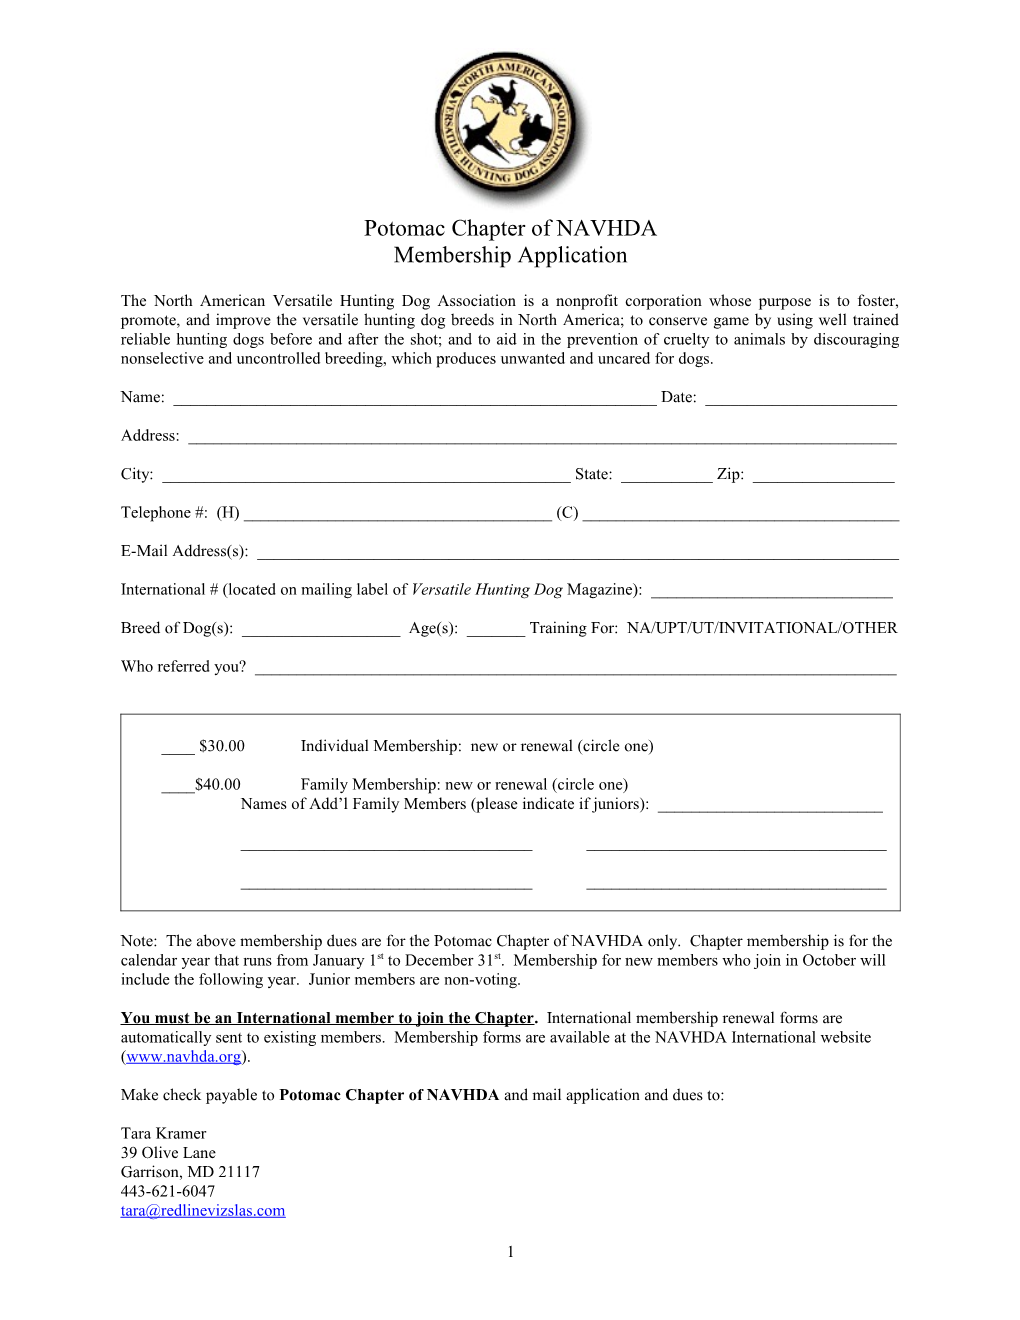 NAVHDA-Potomac Chapter Membership Application